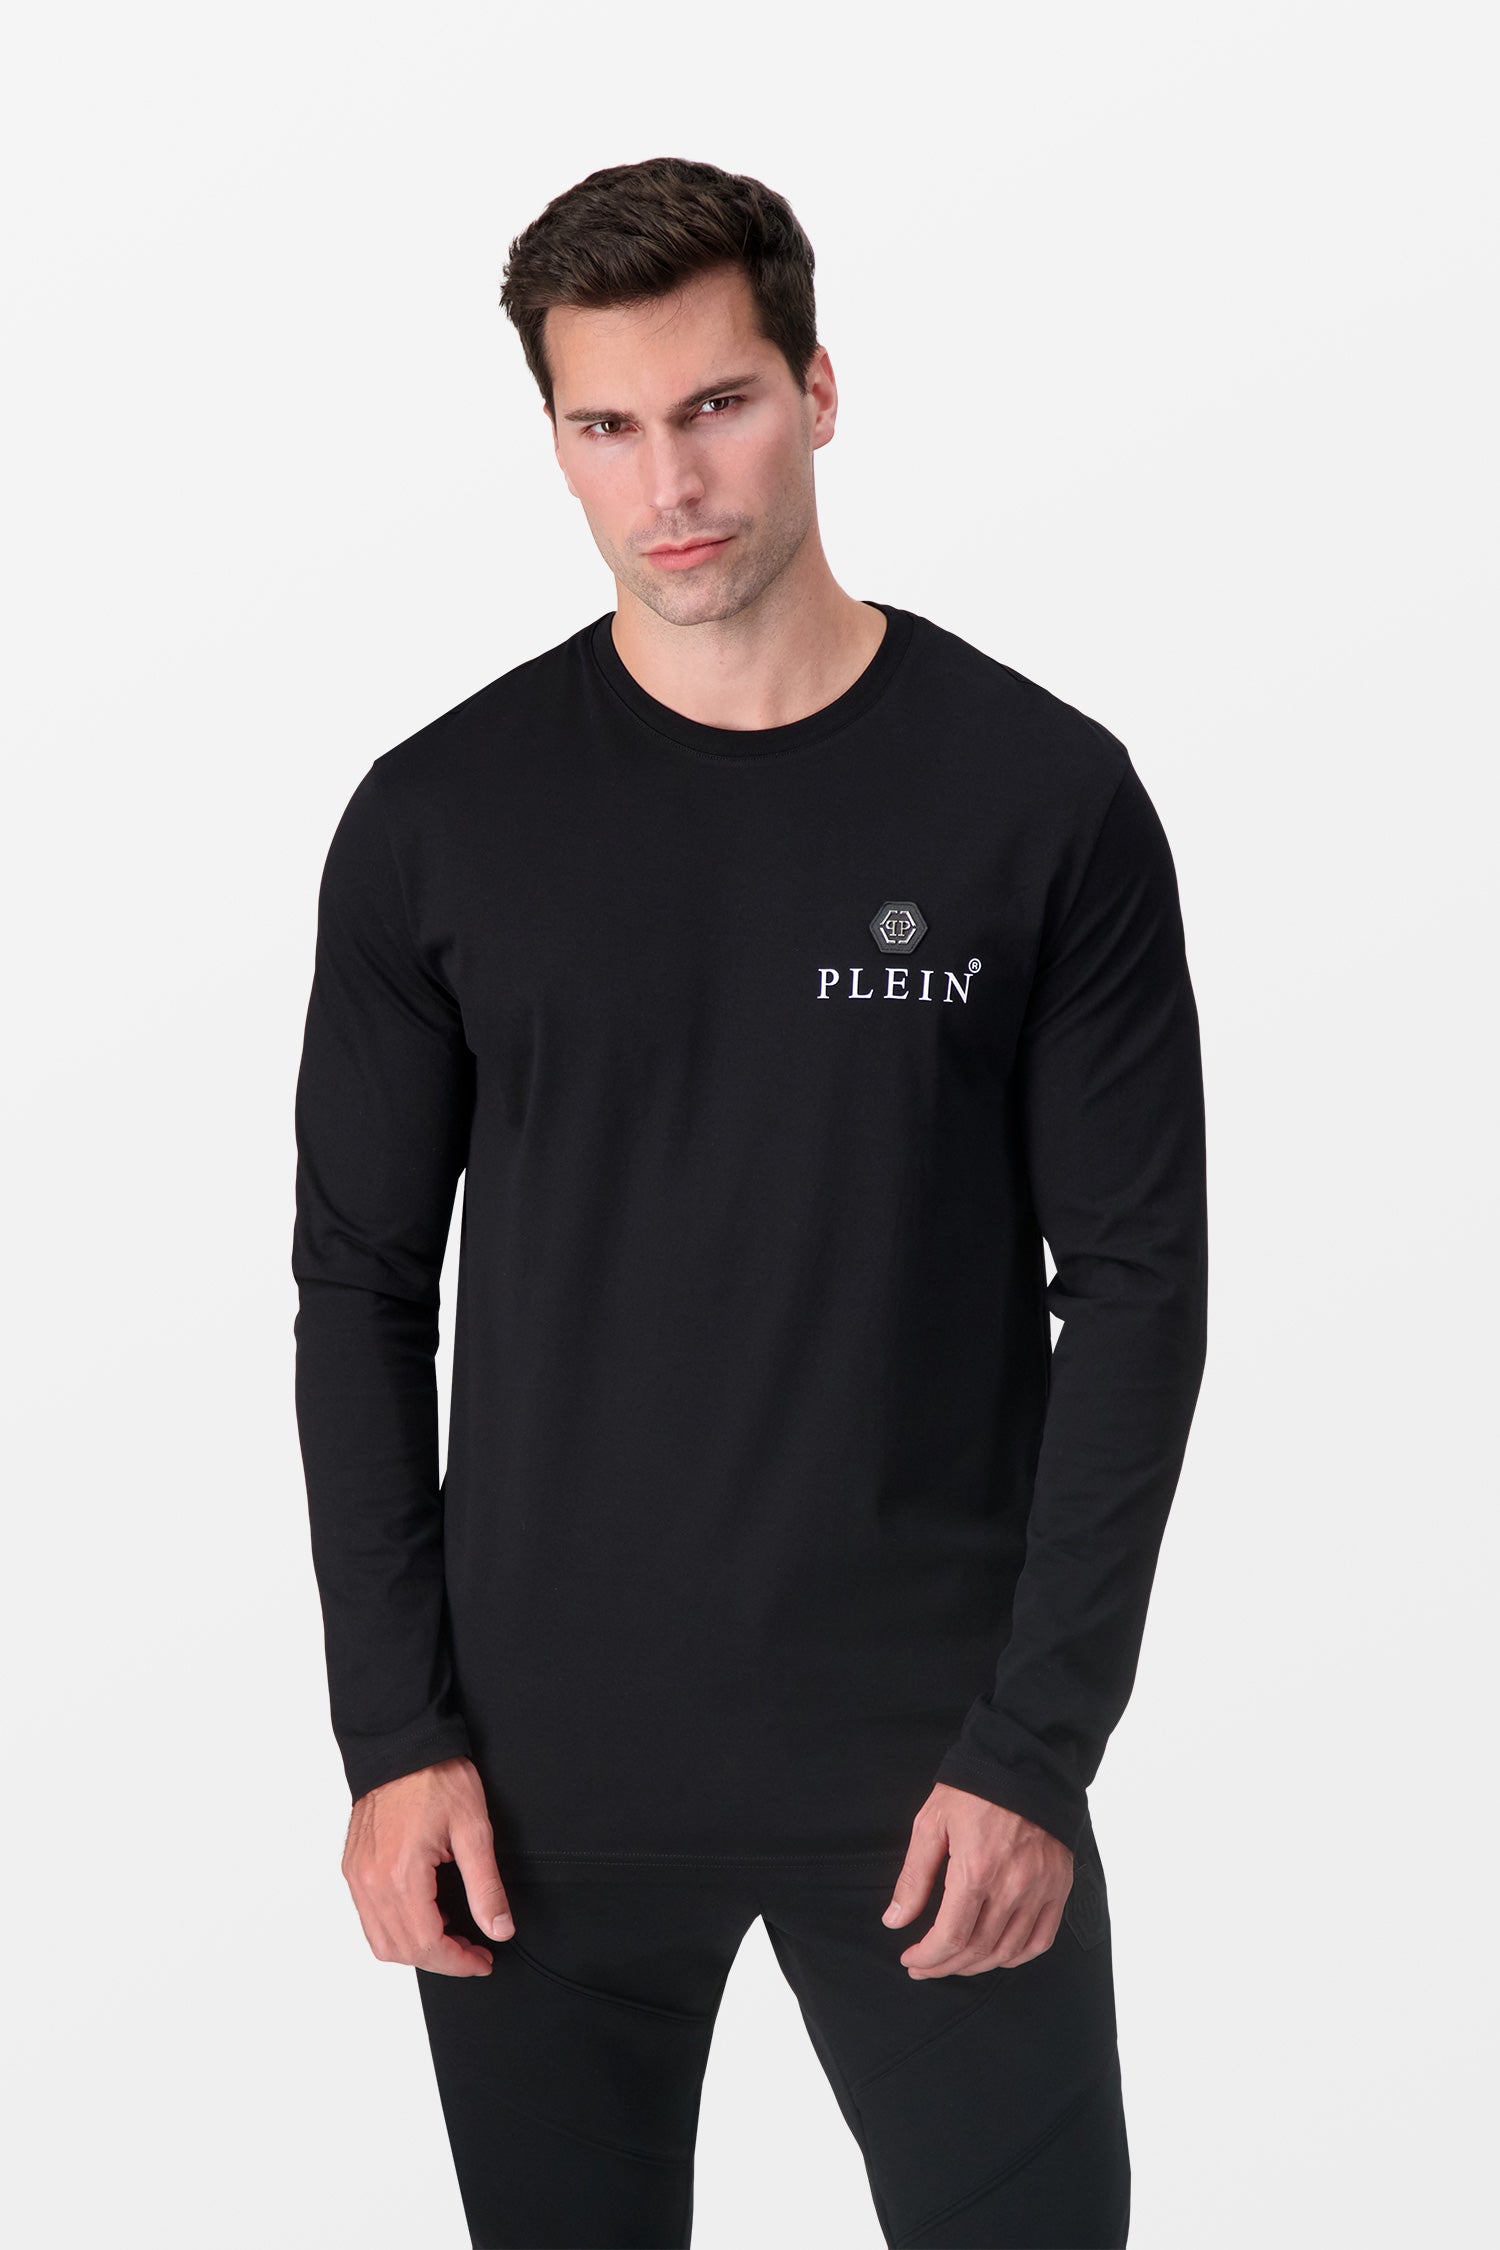 Philipp Plein Black Long Sleeve Iconic Plein T-Shirt